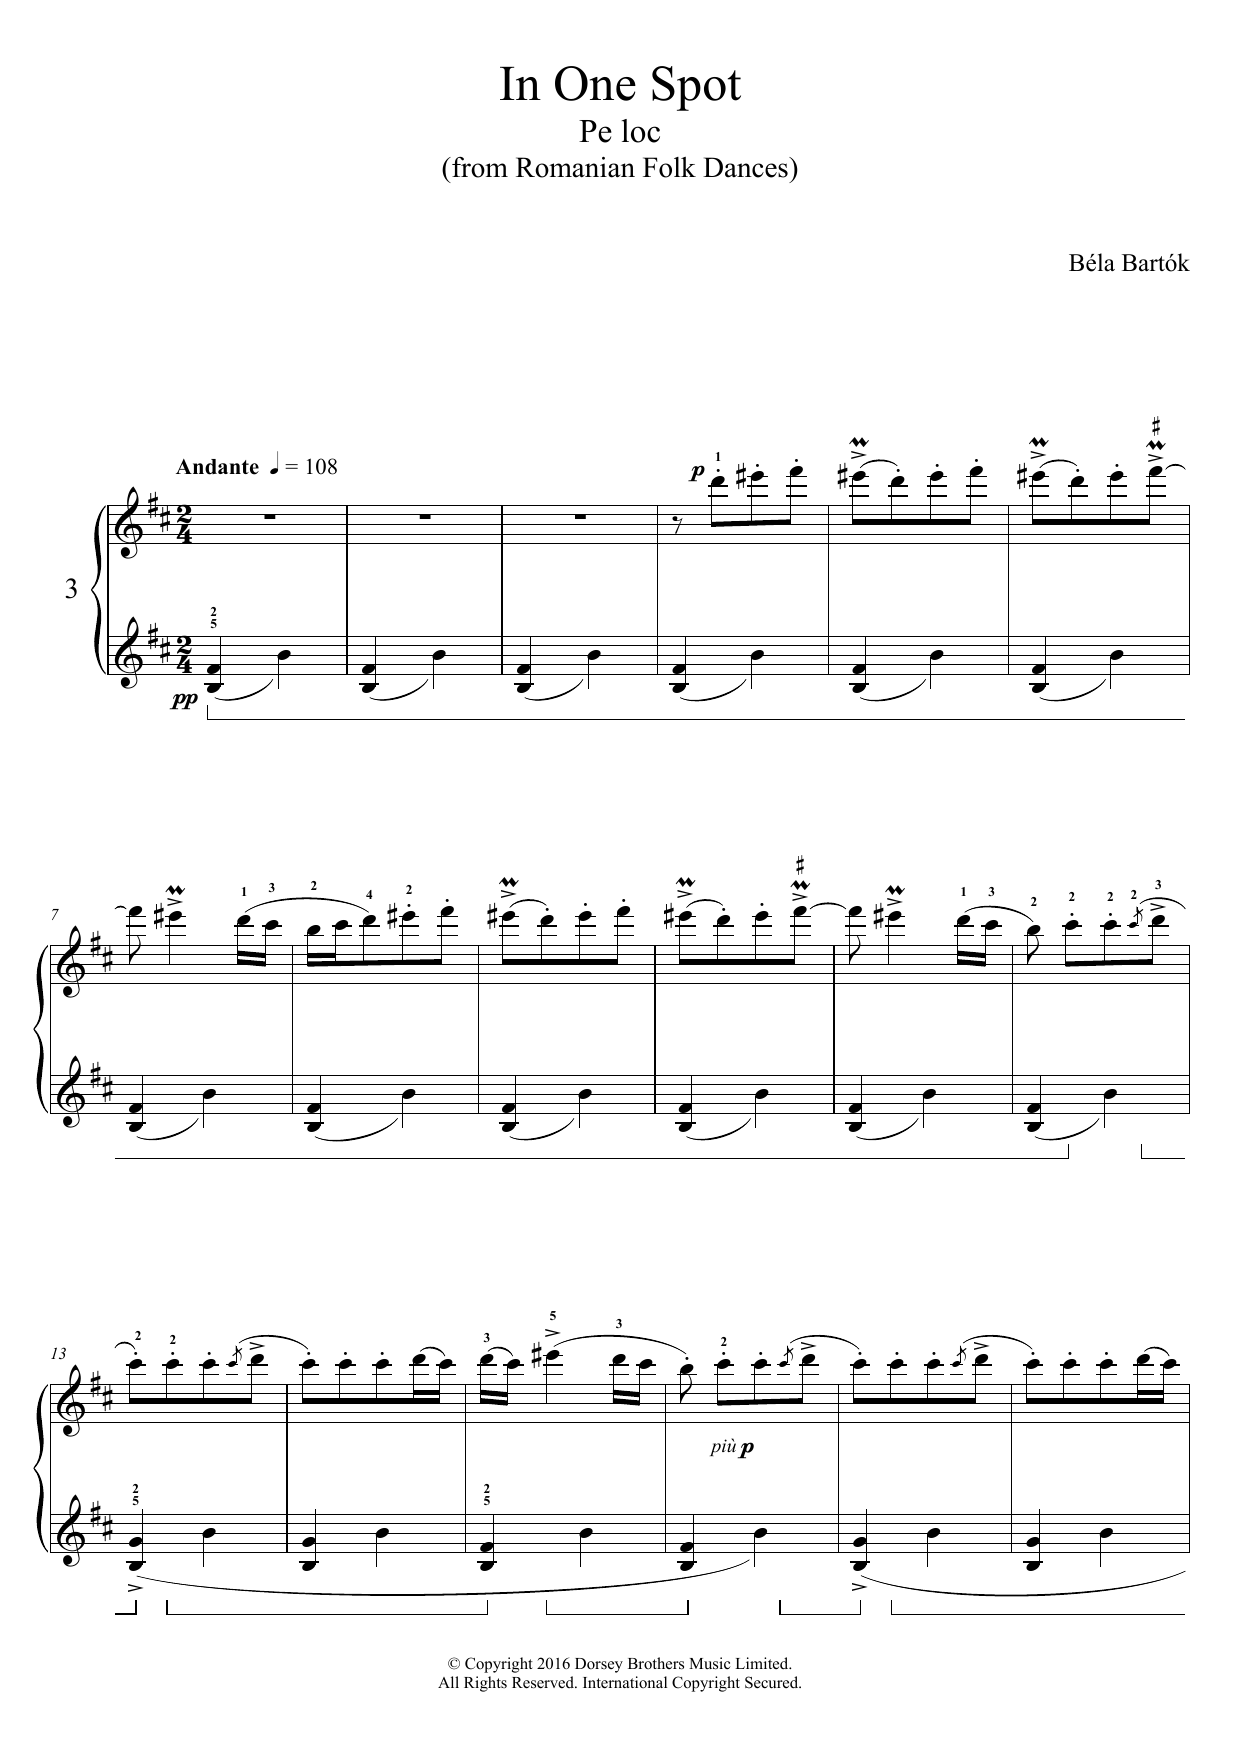 Download Bela Bartok In One Spot (from Romanian Folk Dances) Sheet Music